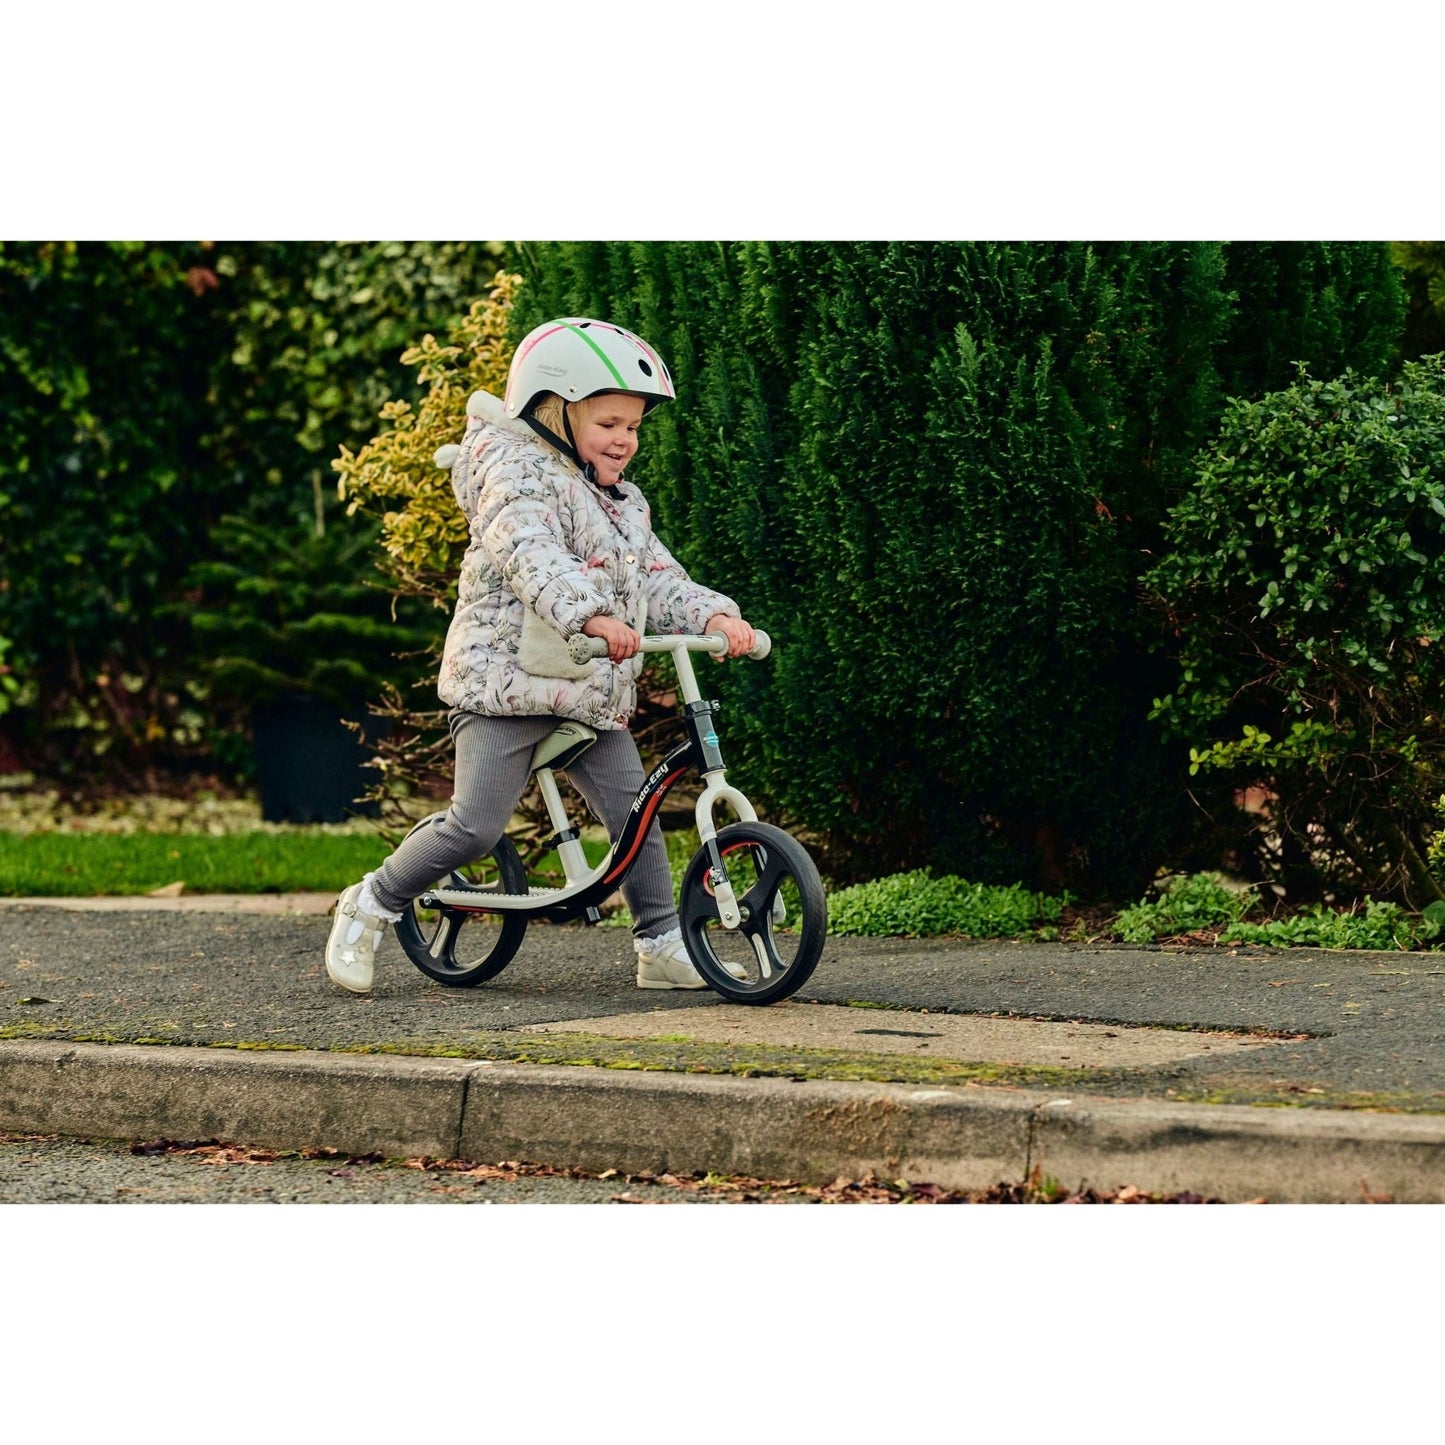 girl riding Ride-Ezy Go Glo Balance Bike - Black & Silver on pavement